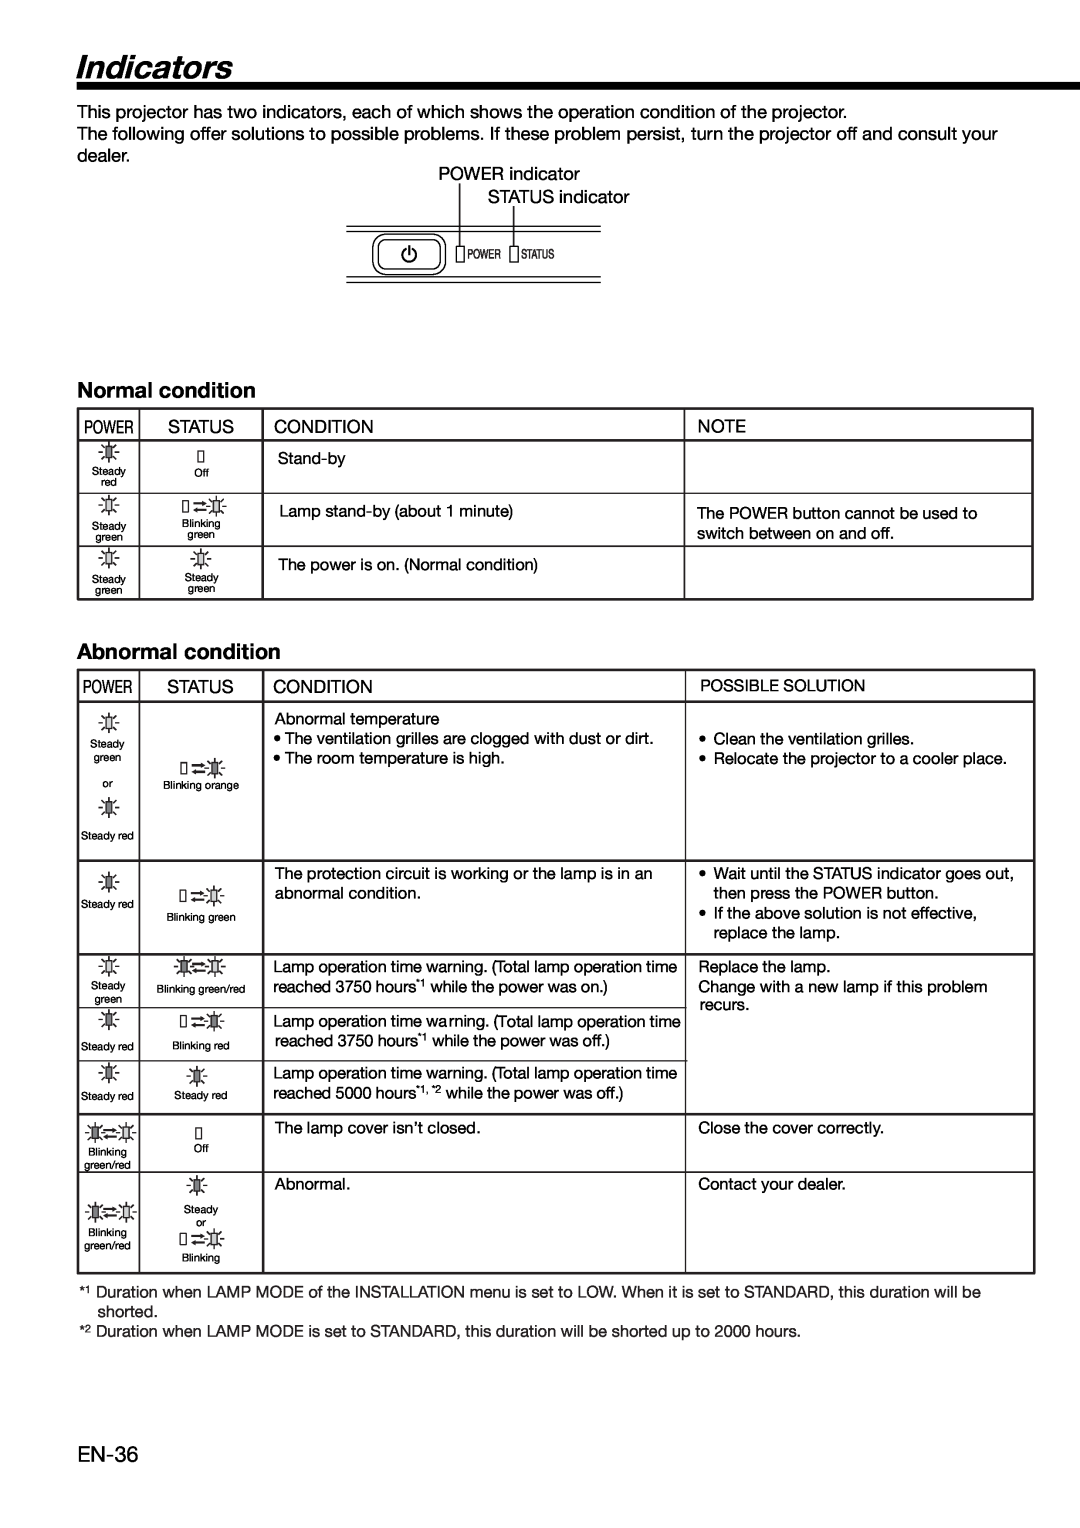 Mitsubishi Electronics XD460U user manual Indicators, Normal condition, Abnormal condition 